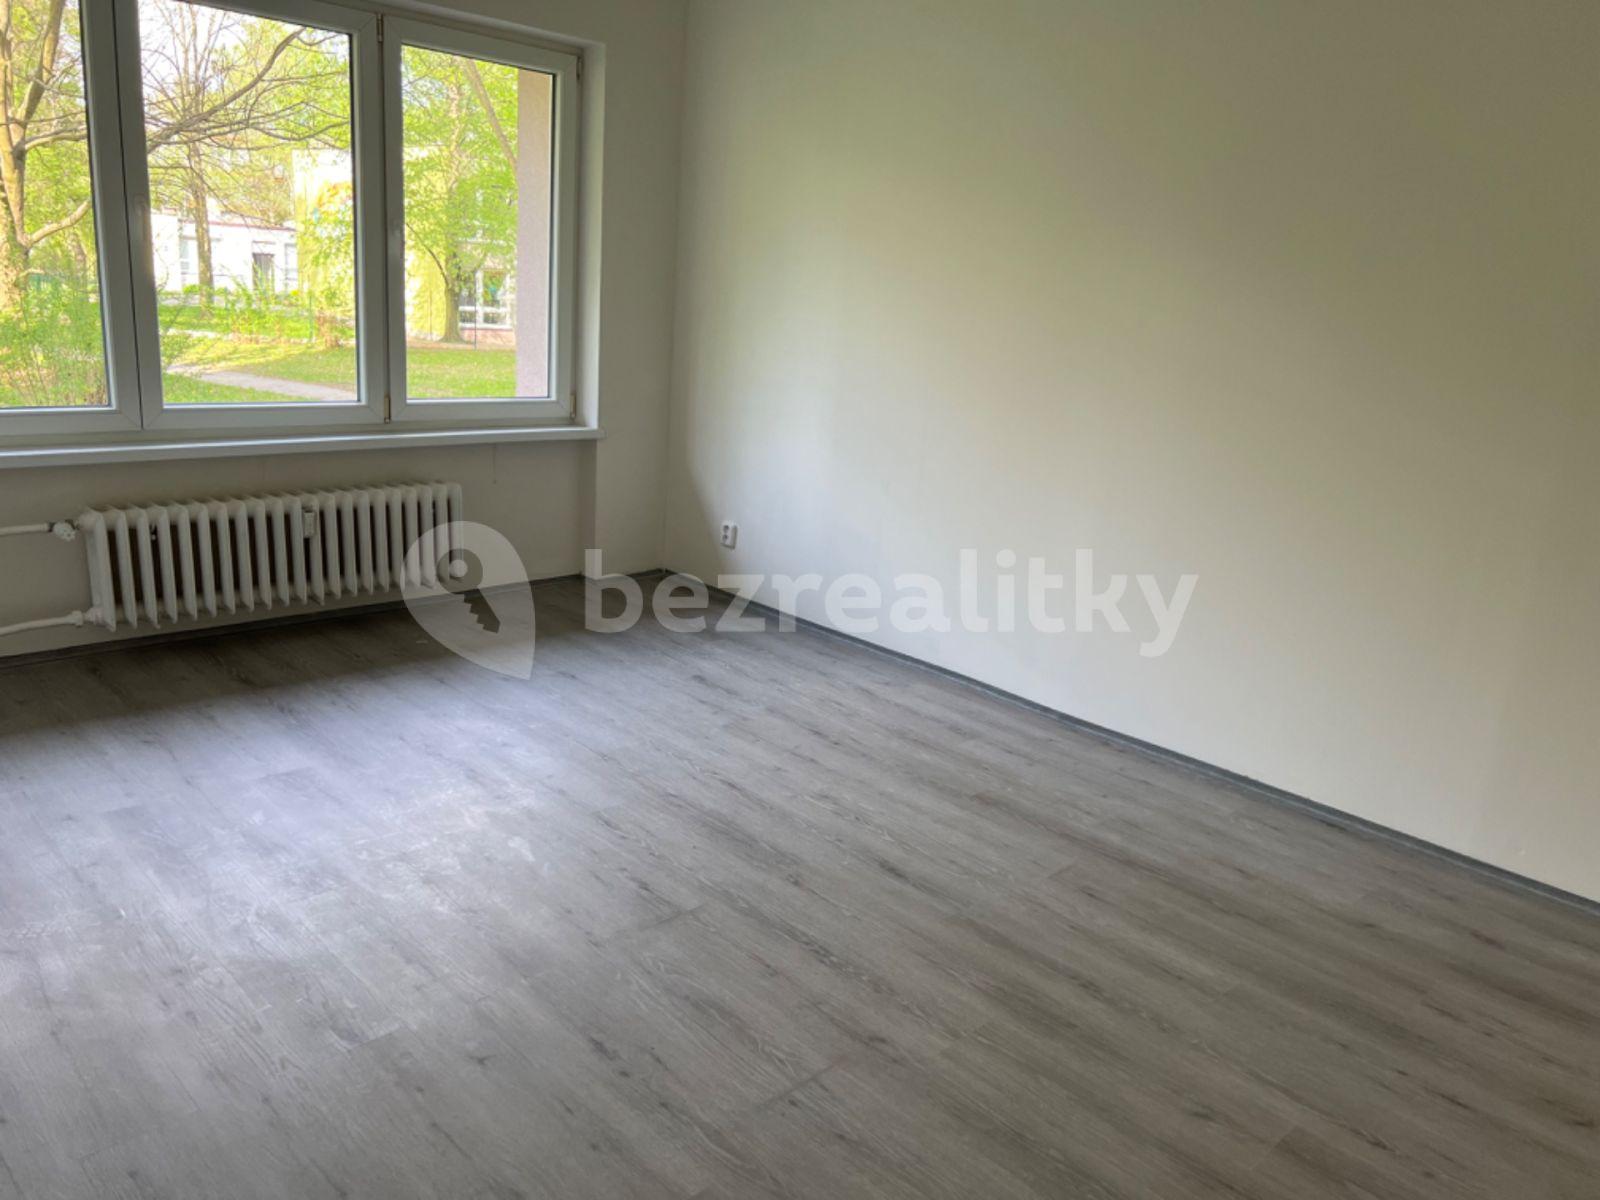 Predaj bytu 1-izbový 35 m², 29. dubna, Ostrava, Moravskoslezský kraj